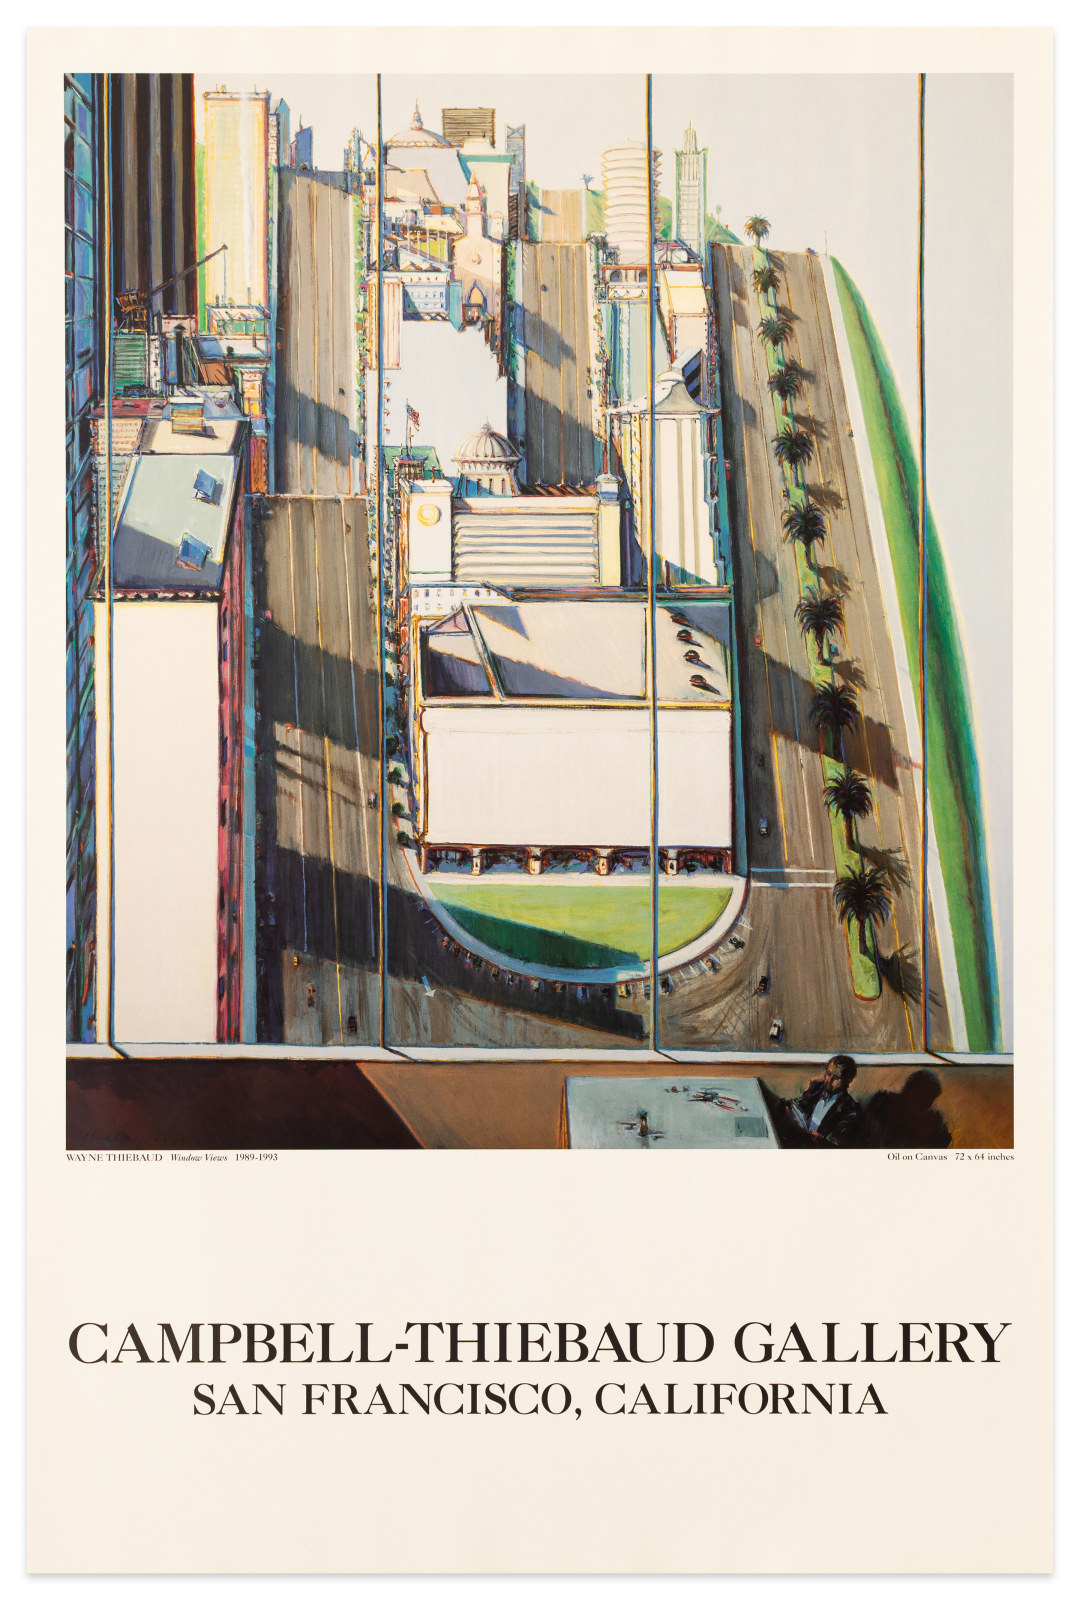 Wayne Thiebaud Window Views at Cambell-Thiebaud Gallery - 1993, Poster - Publications - Paul Thiebaud Gallery